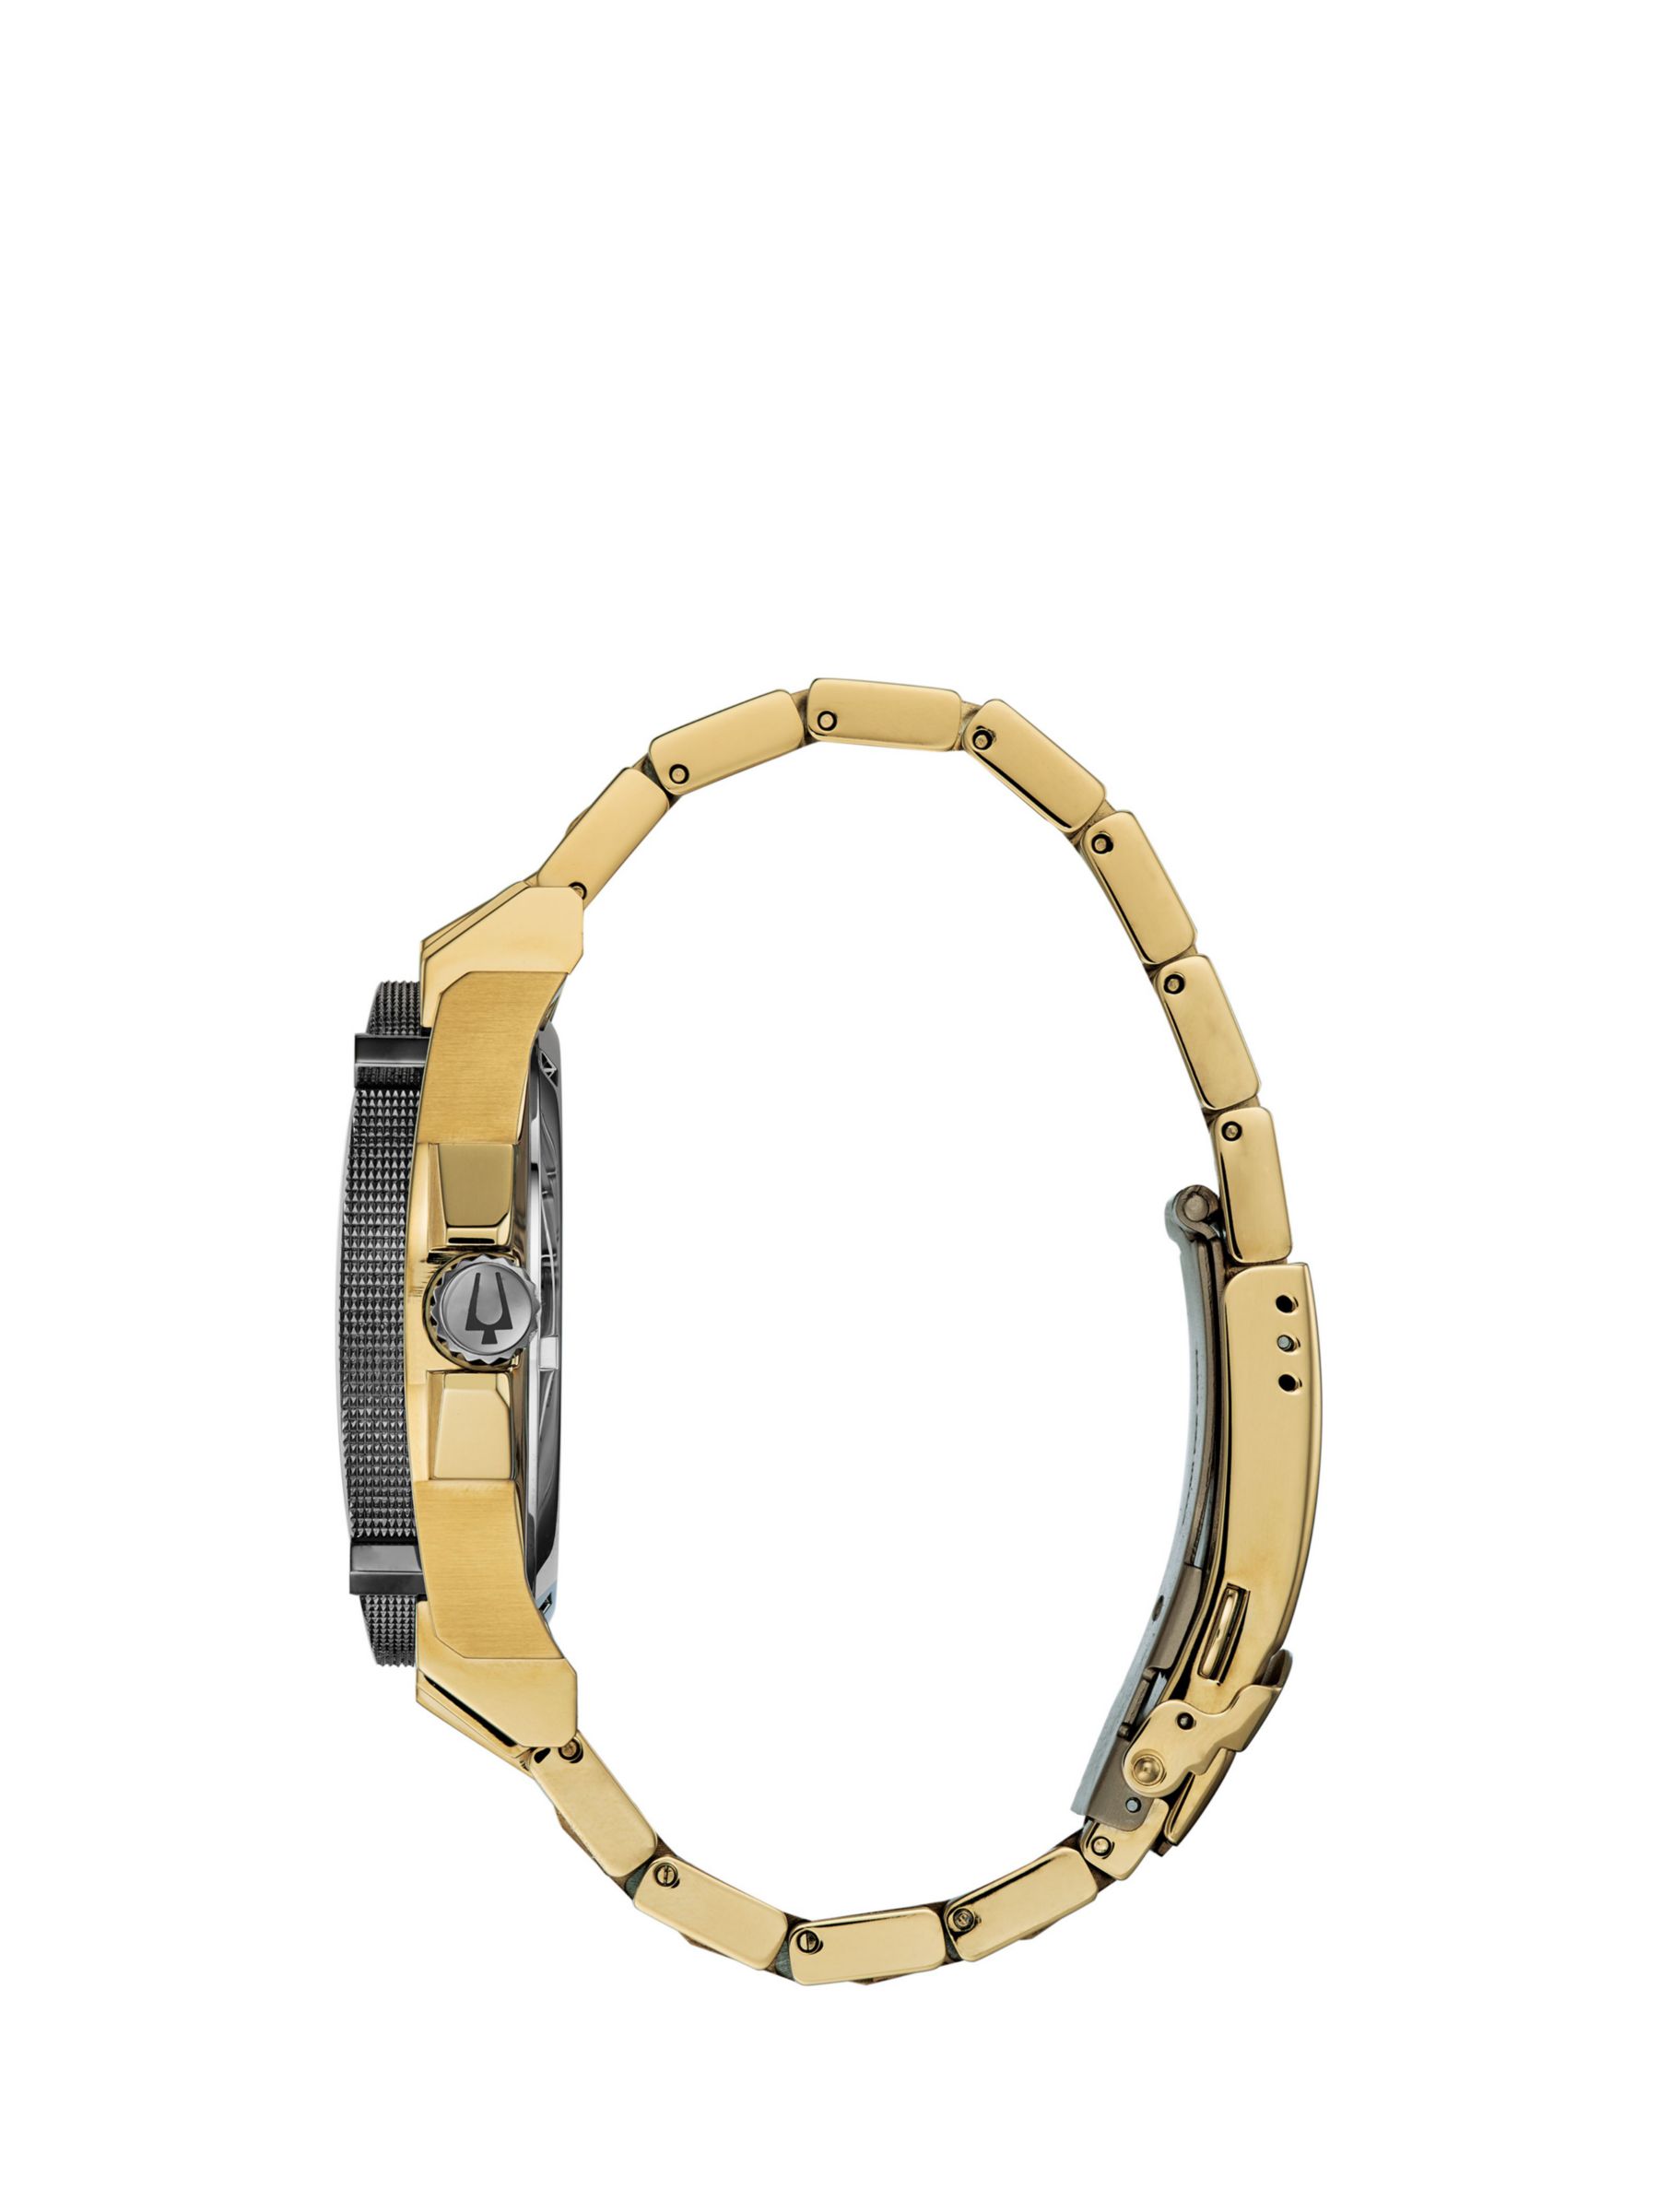 Bulova Men's Precisionist Diamond Date Bracelet Strap Watch, Gold/Grey 98D156